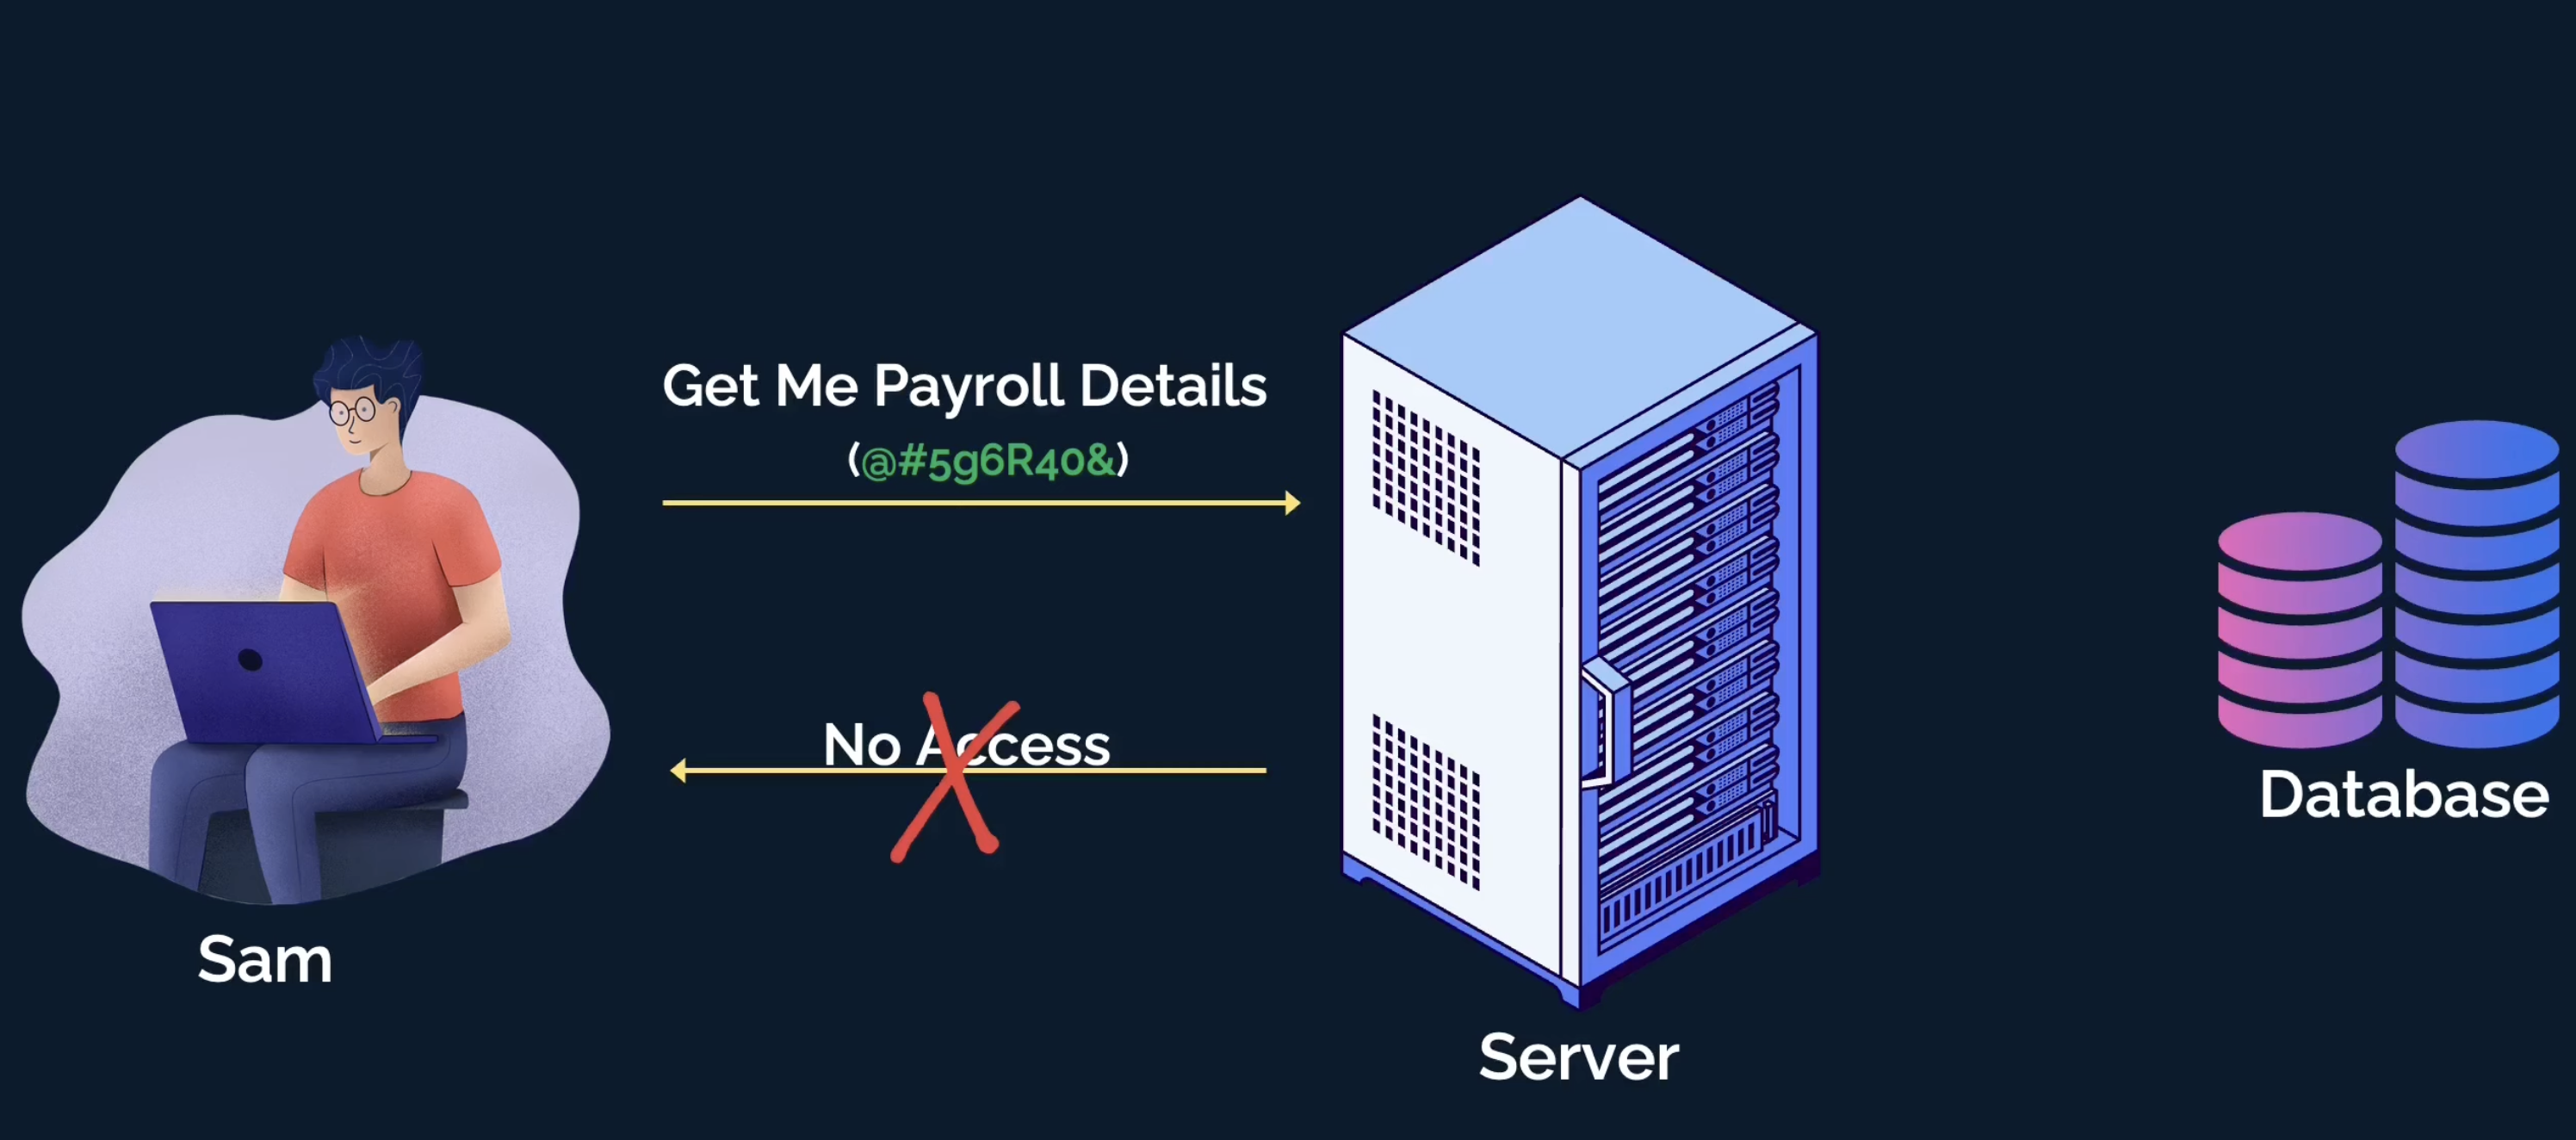 Sam Payroll reject access scenario